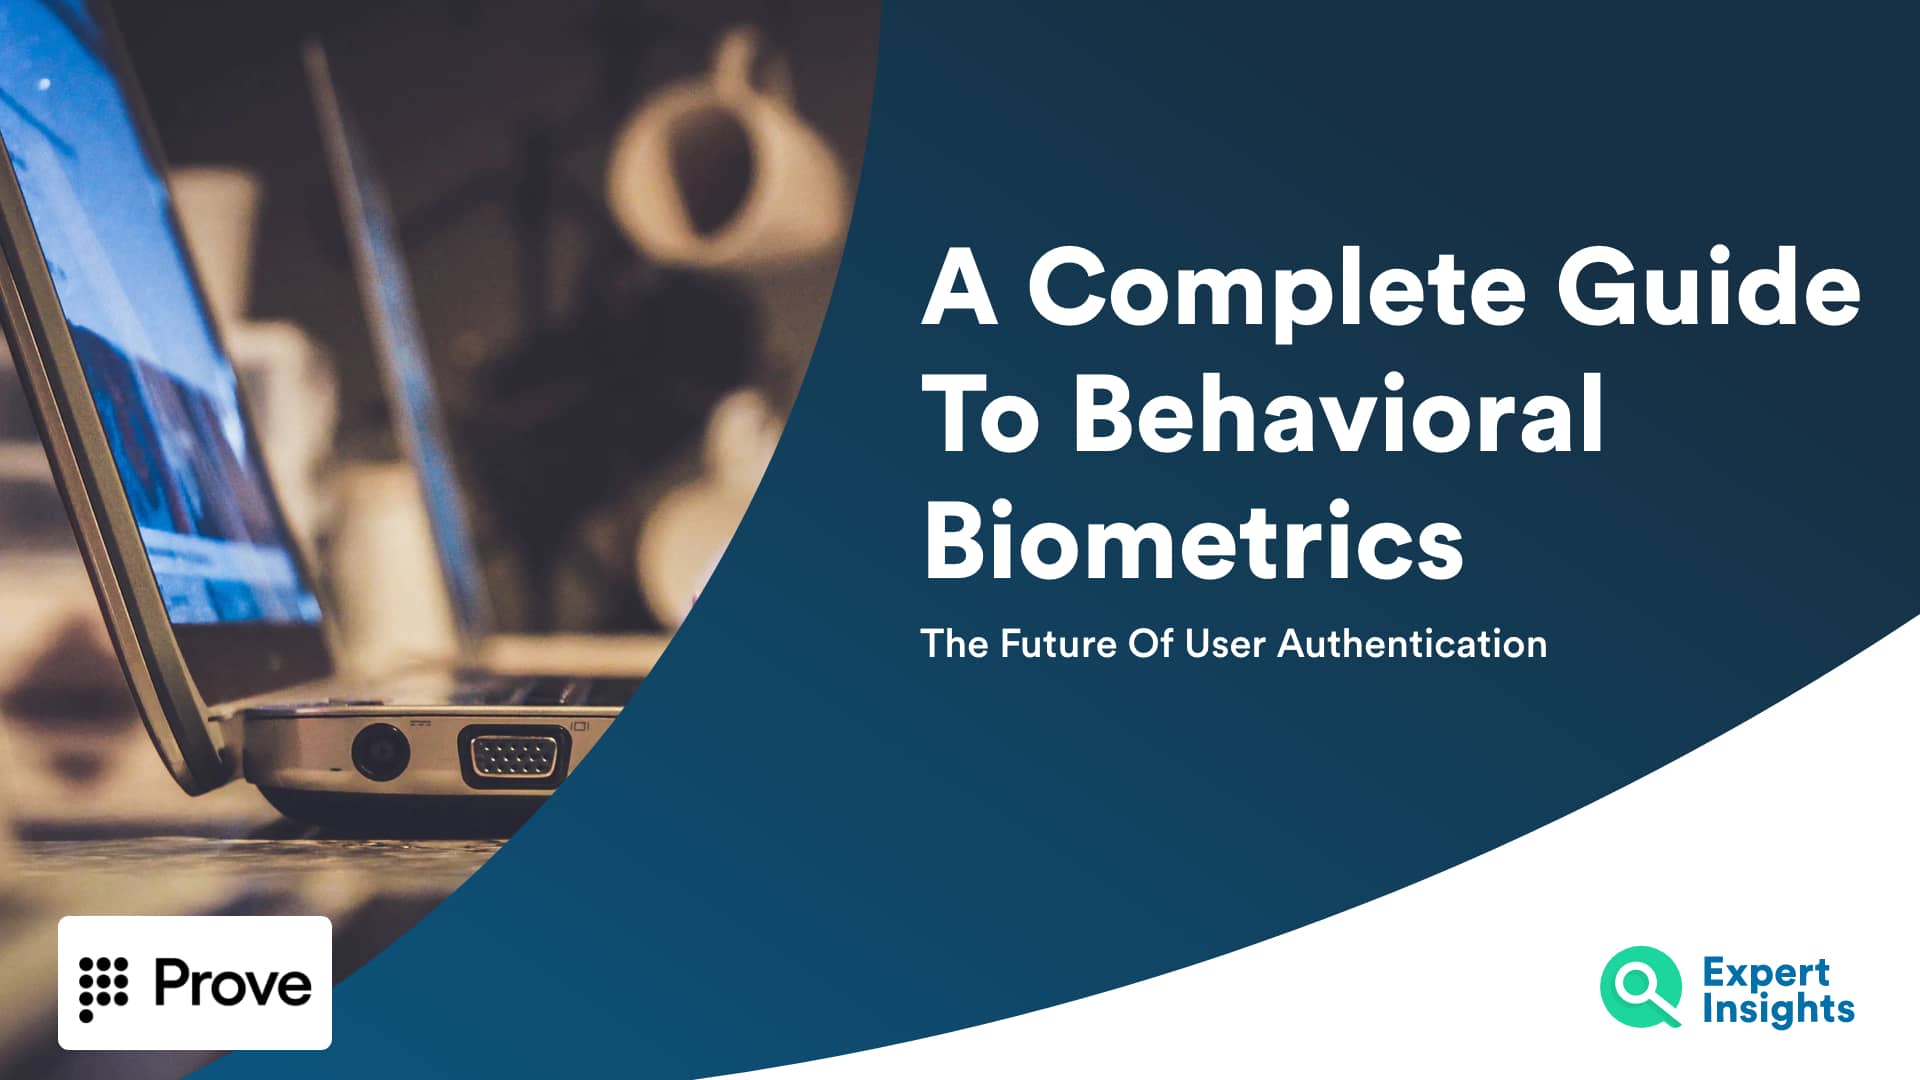 Behavioral biometrics